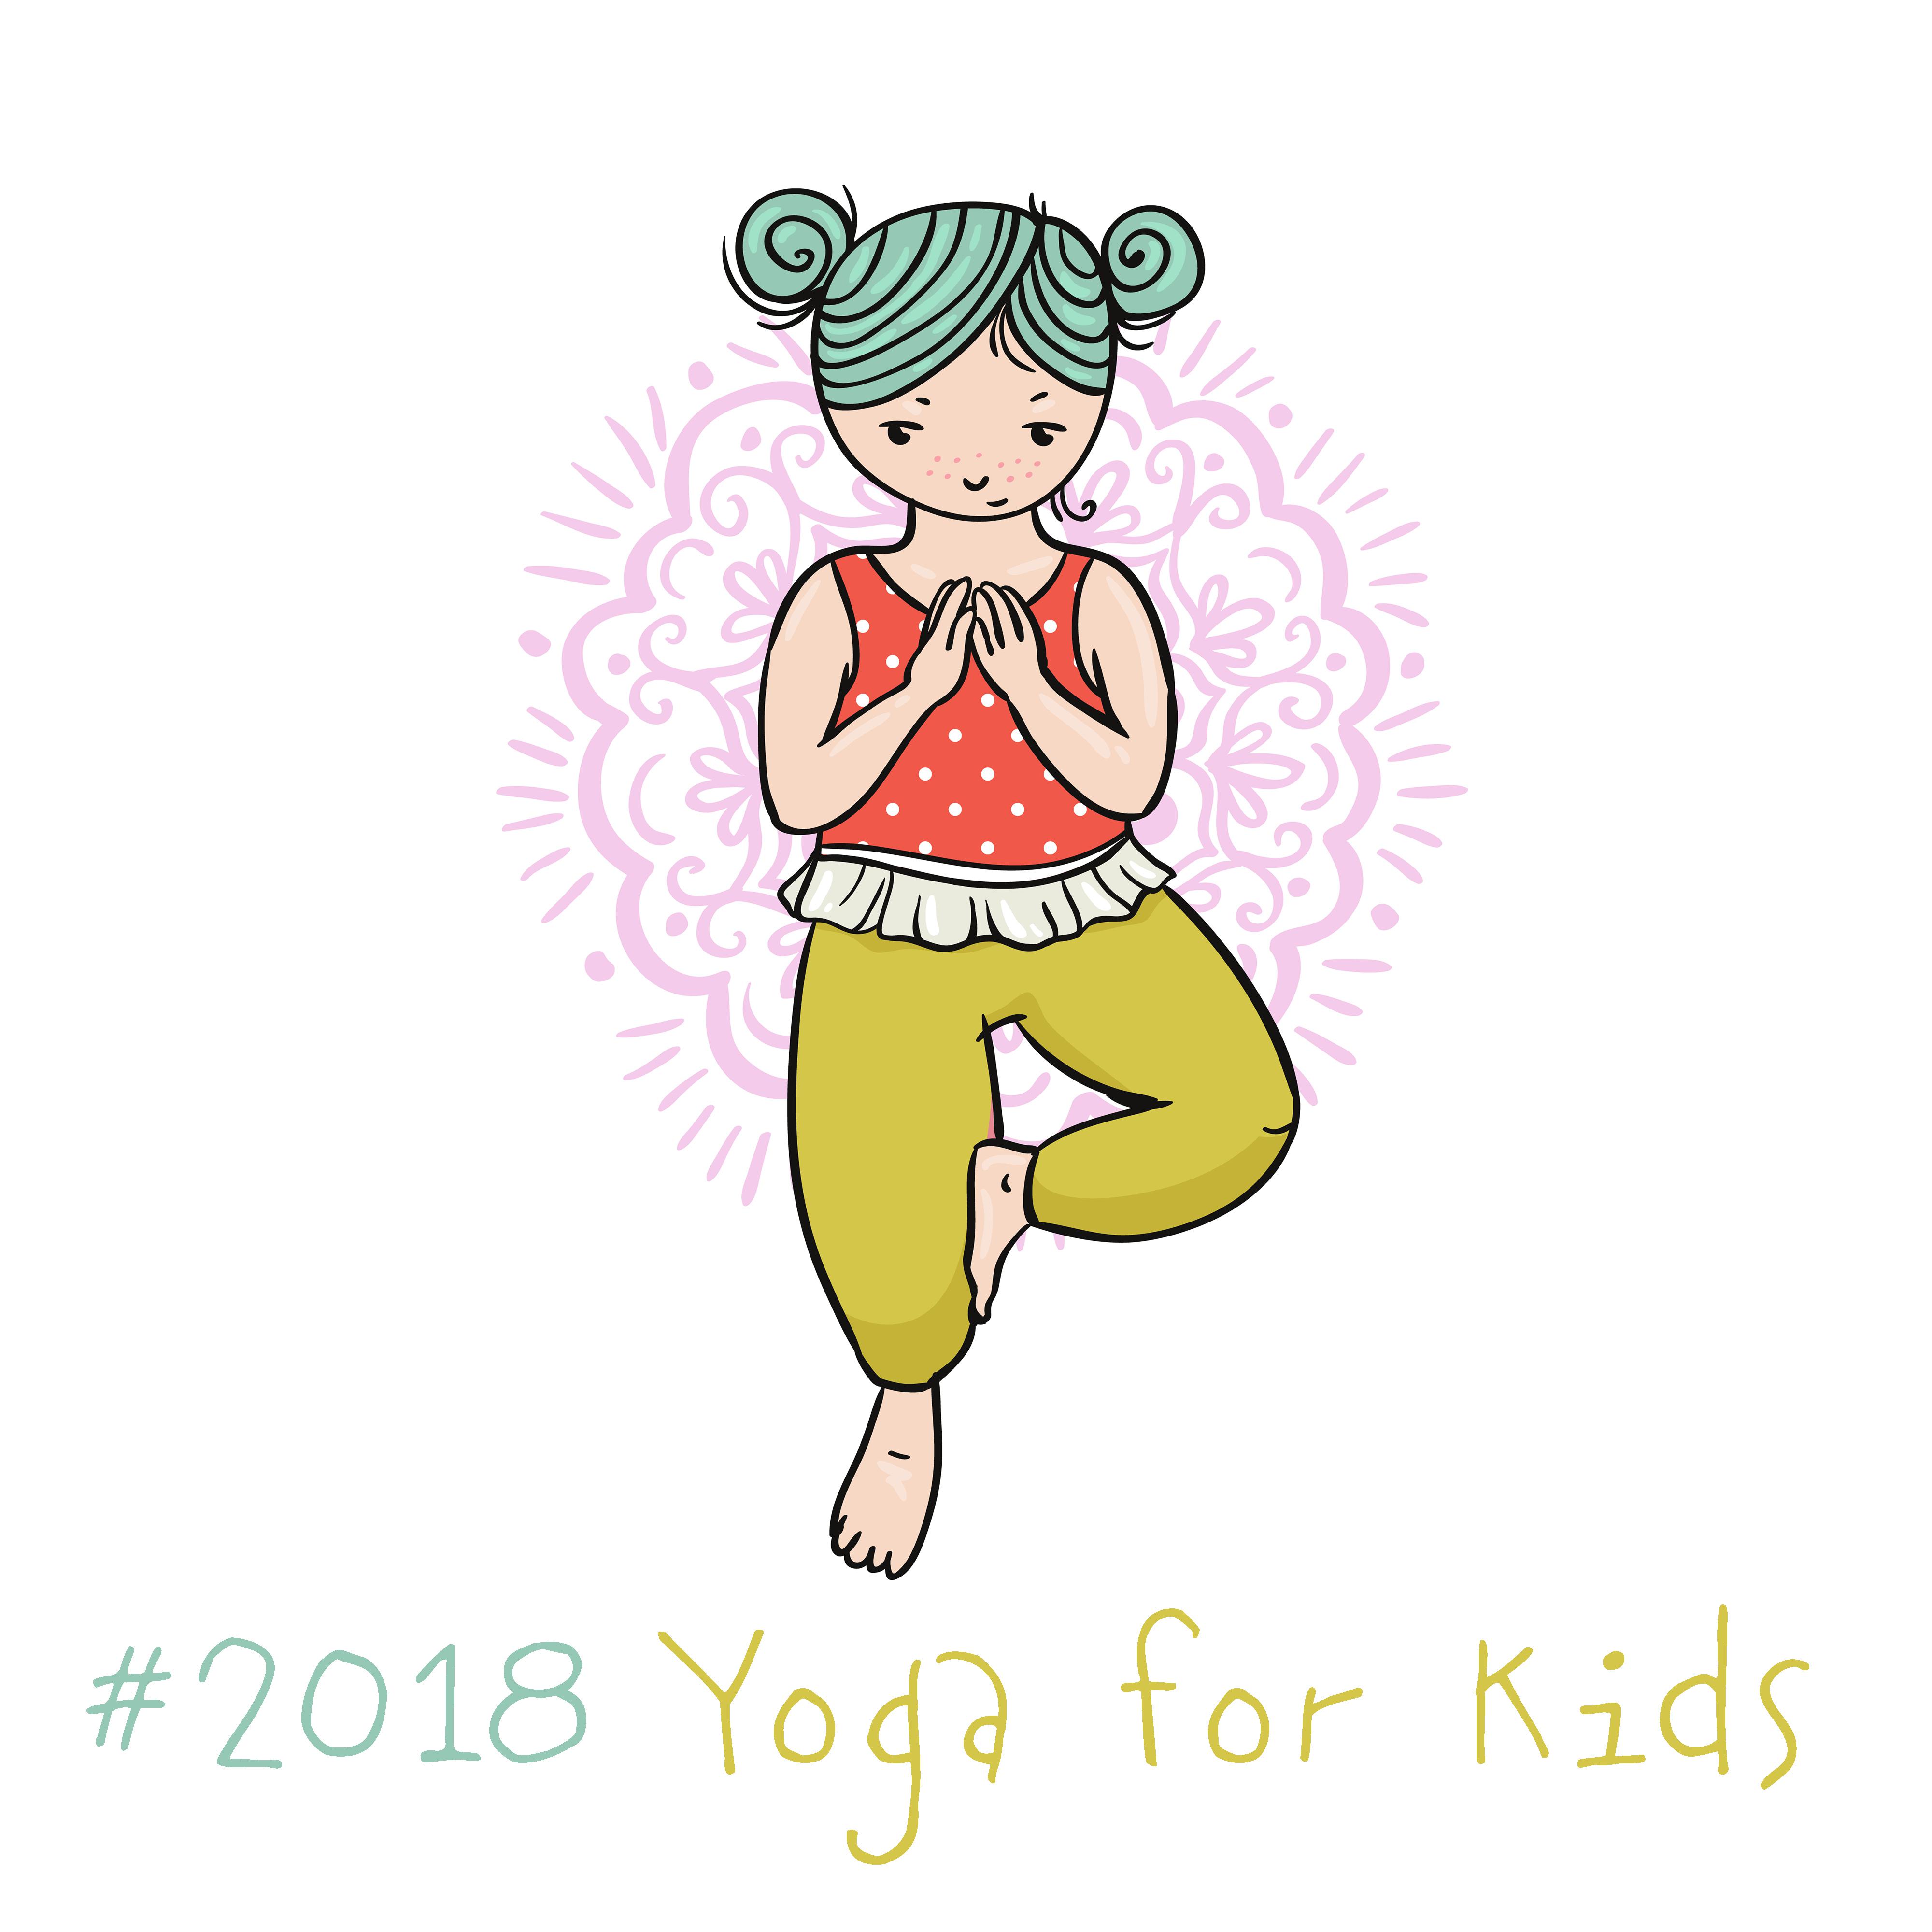 #2018 Yoga for Kids